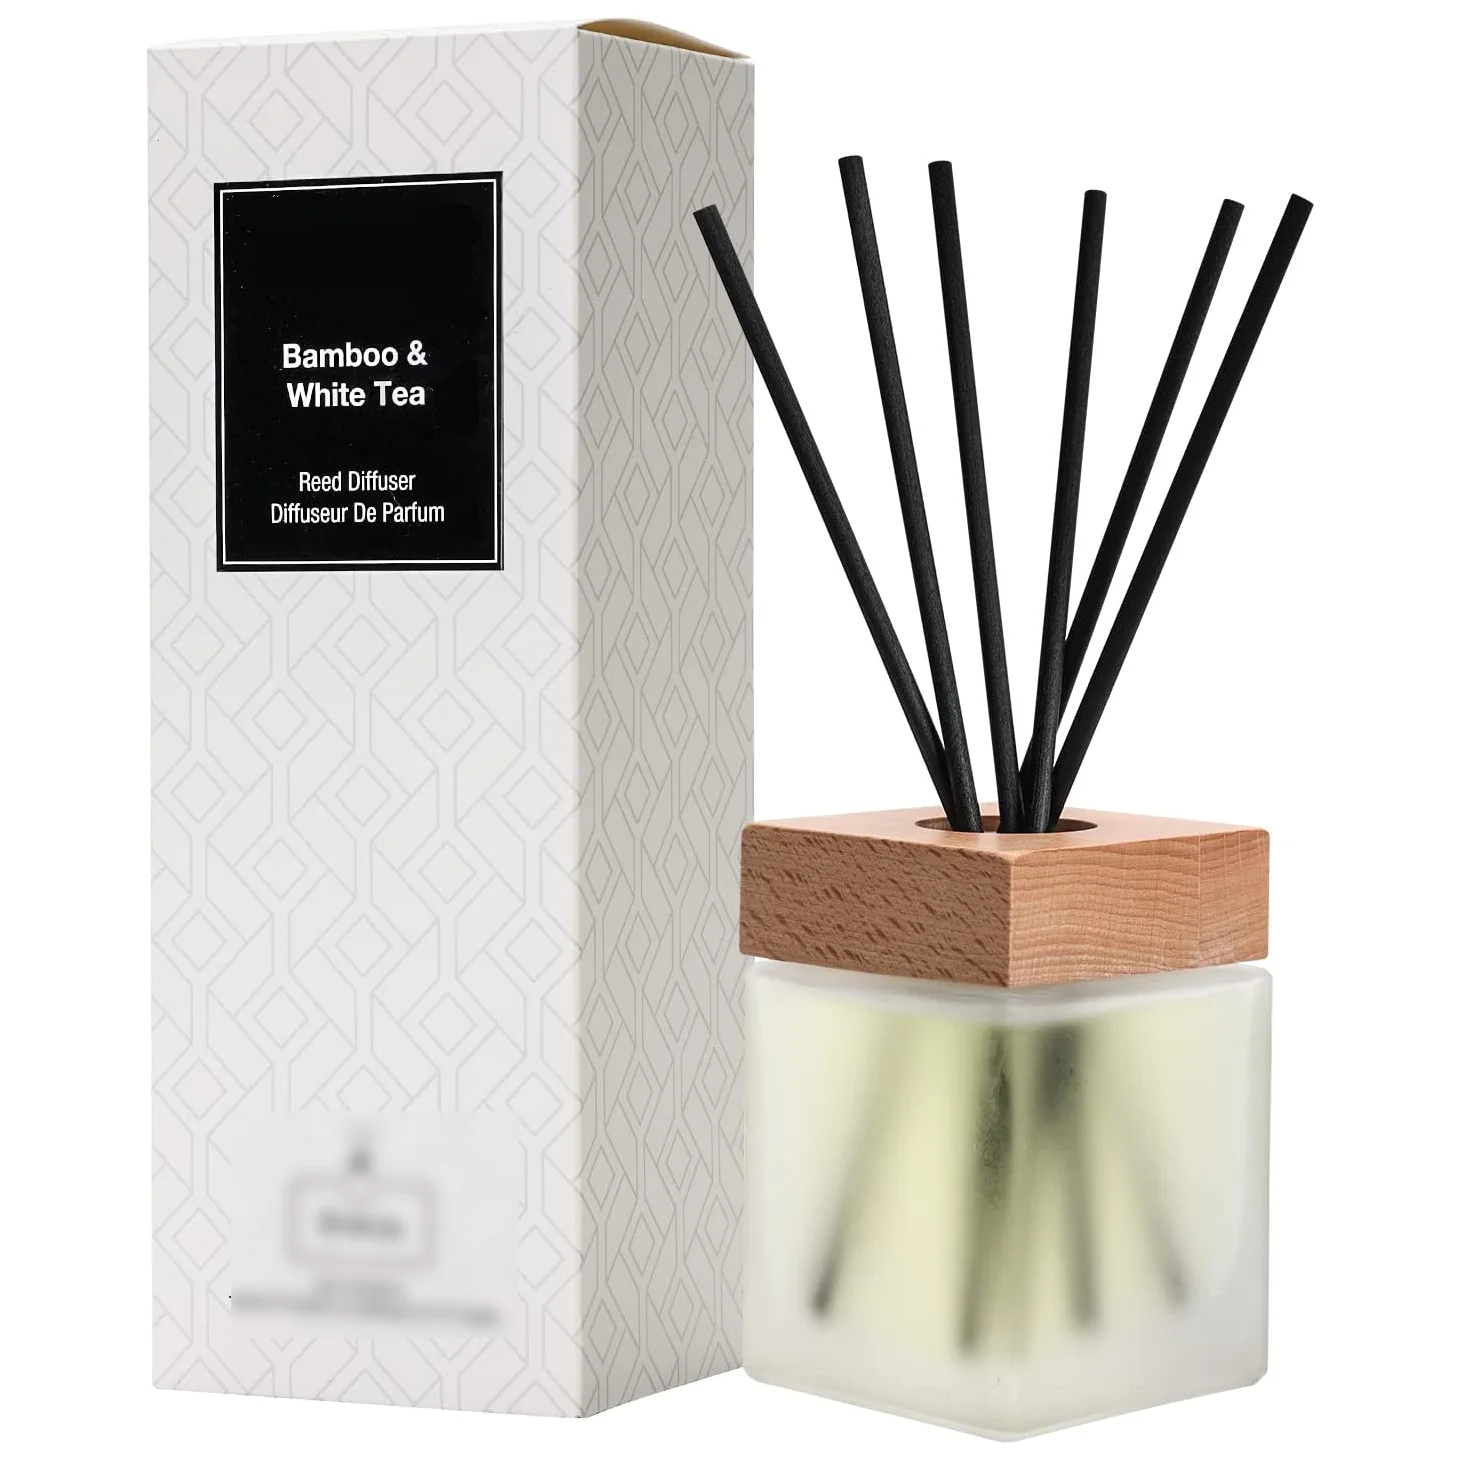 

QSJJ-018 Essential Oil Diffuser Reed Air Freshener sets Lavender Fragrance Reed Diffuser Fragrance Oil Scented Sticks